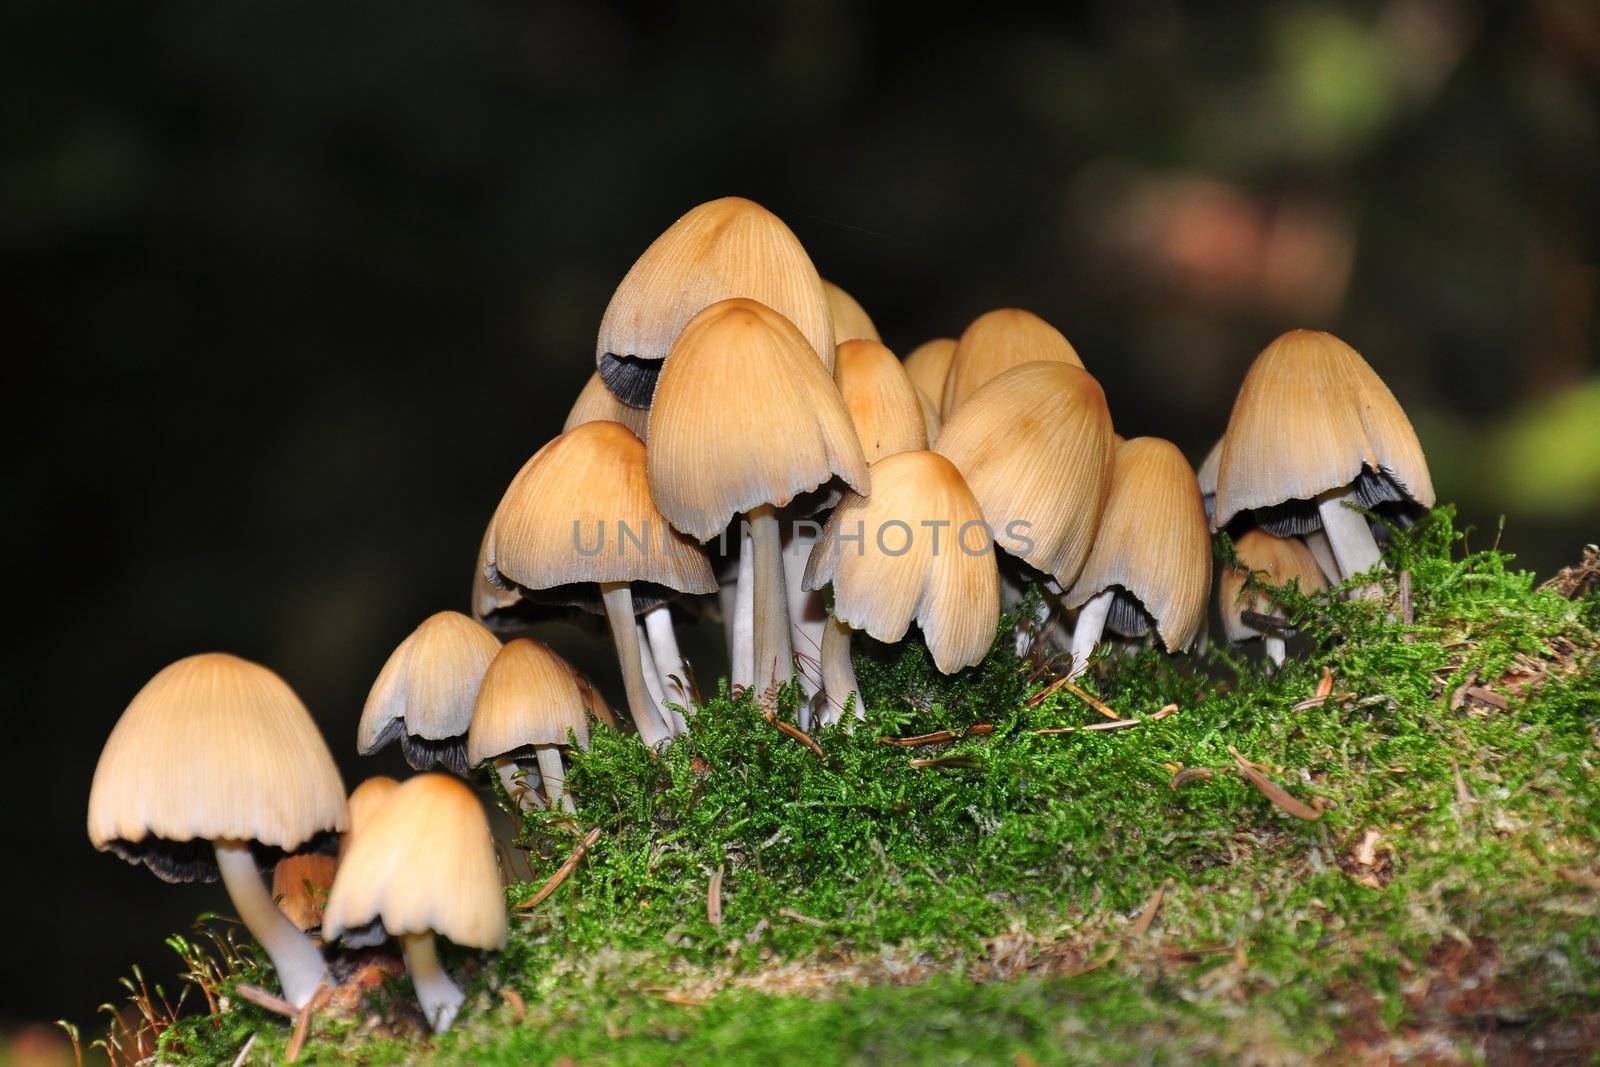 Forest mushrooms by rbiedermann